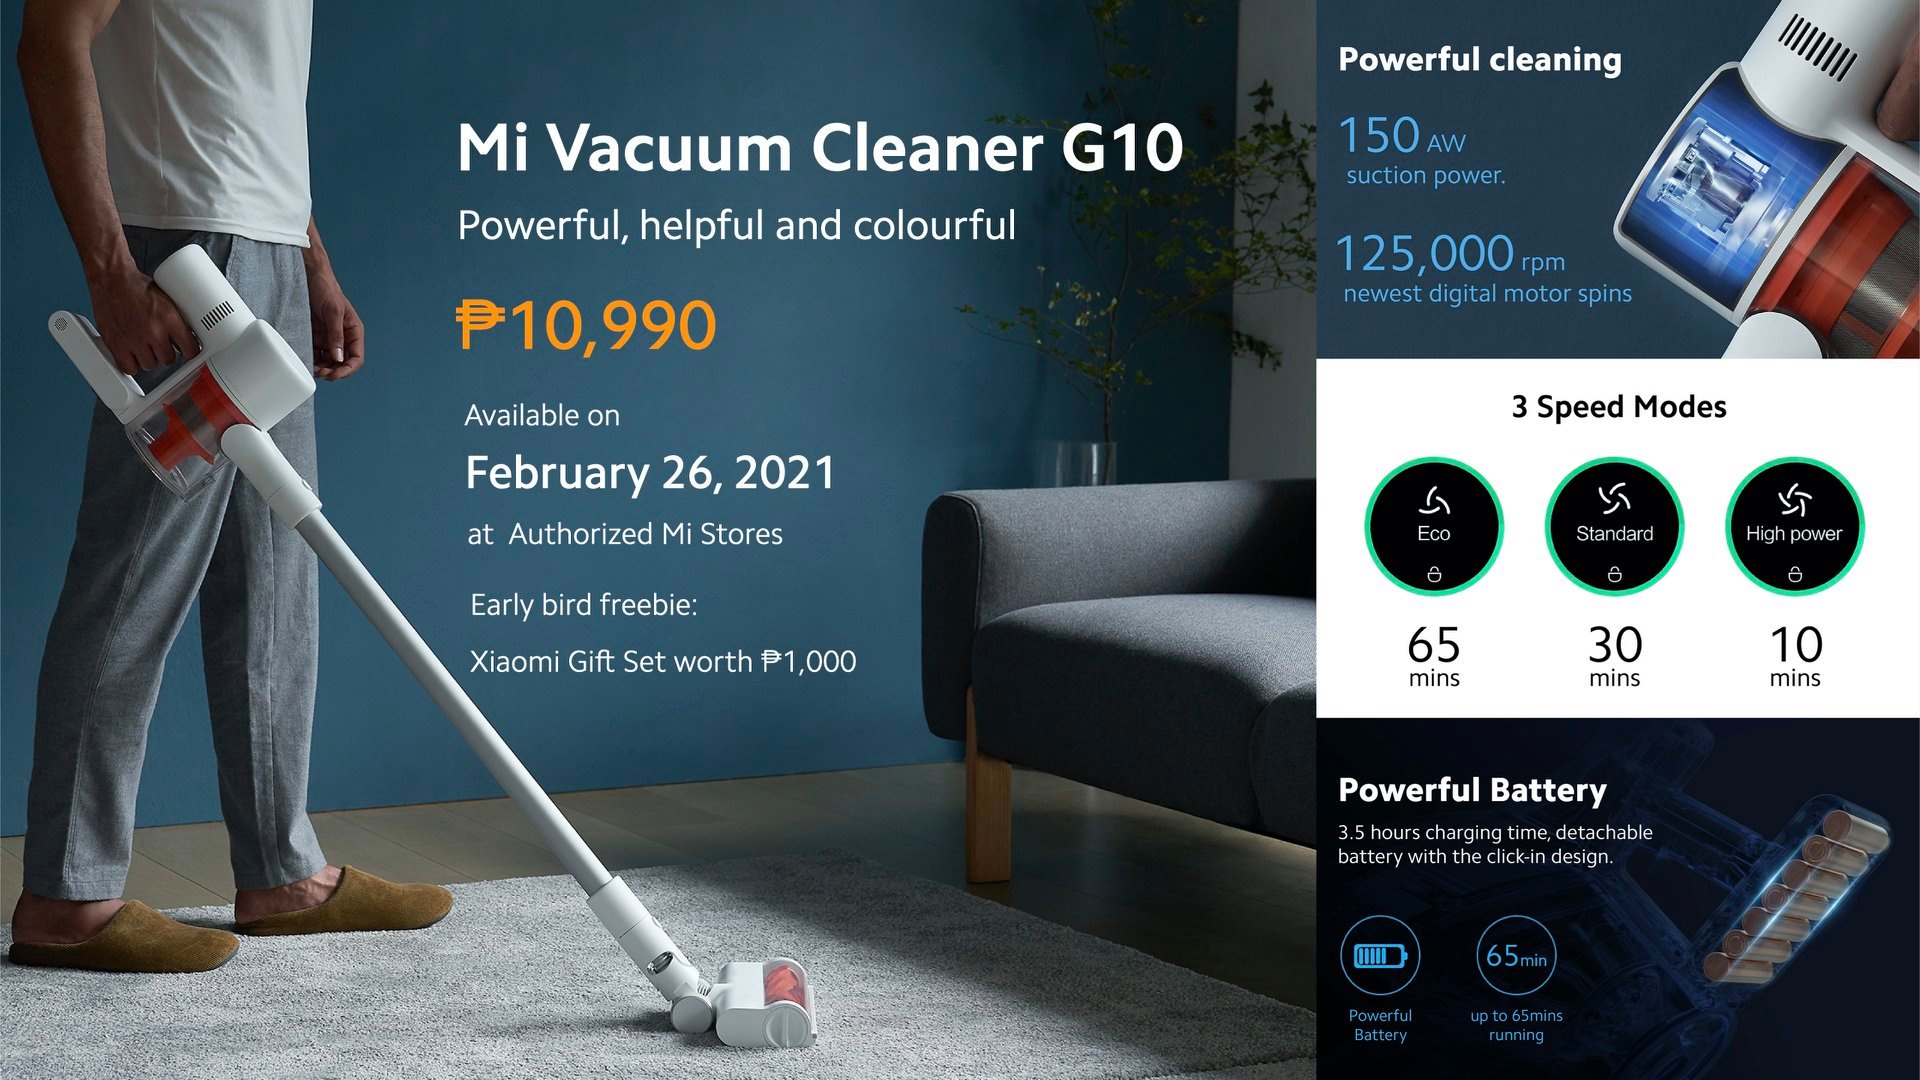 Xiaomi vacuum cleaner g10 обзоры